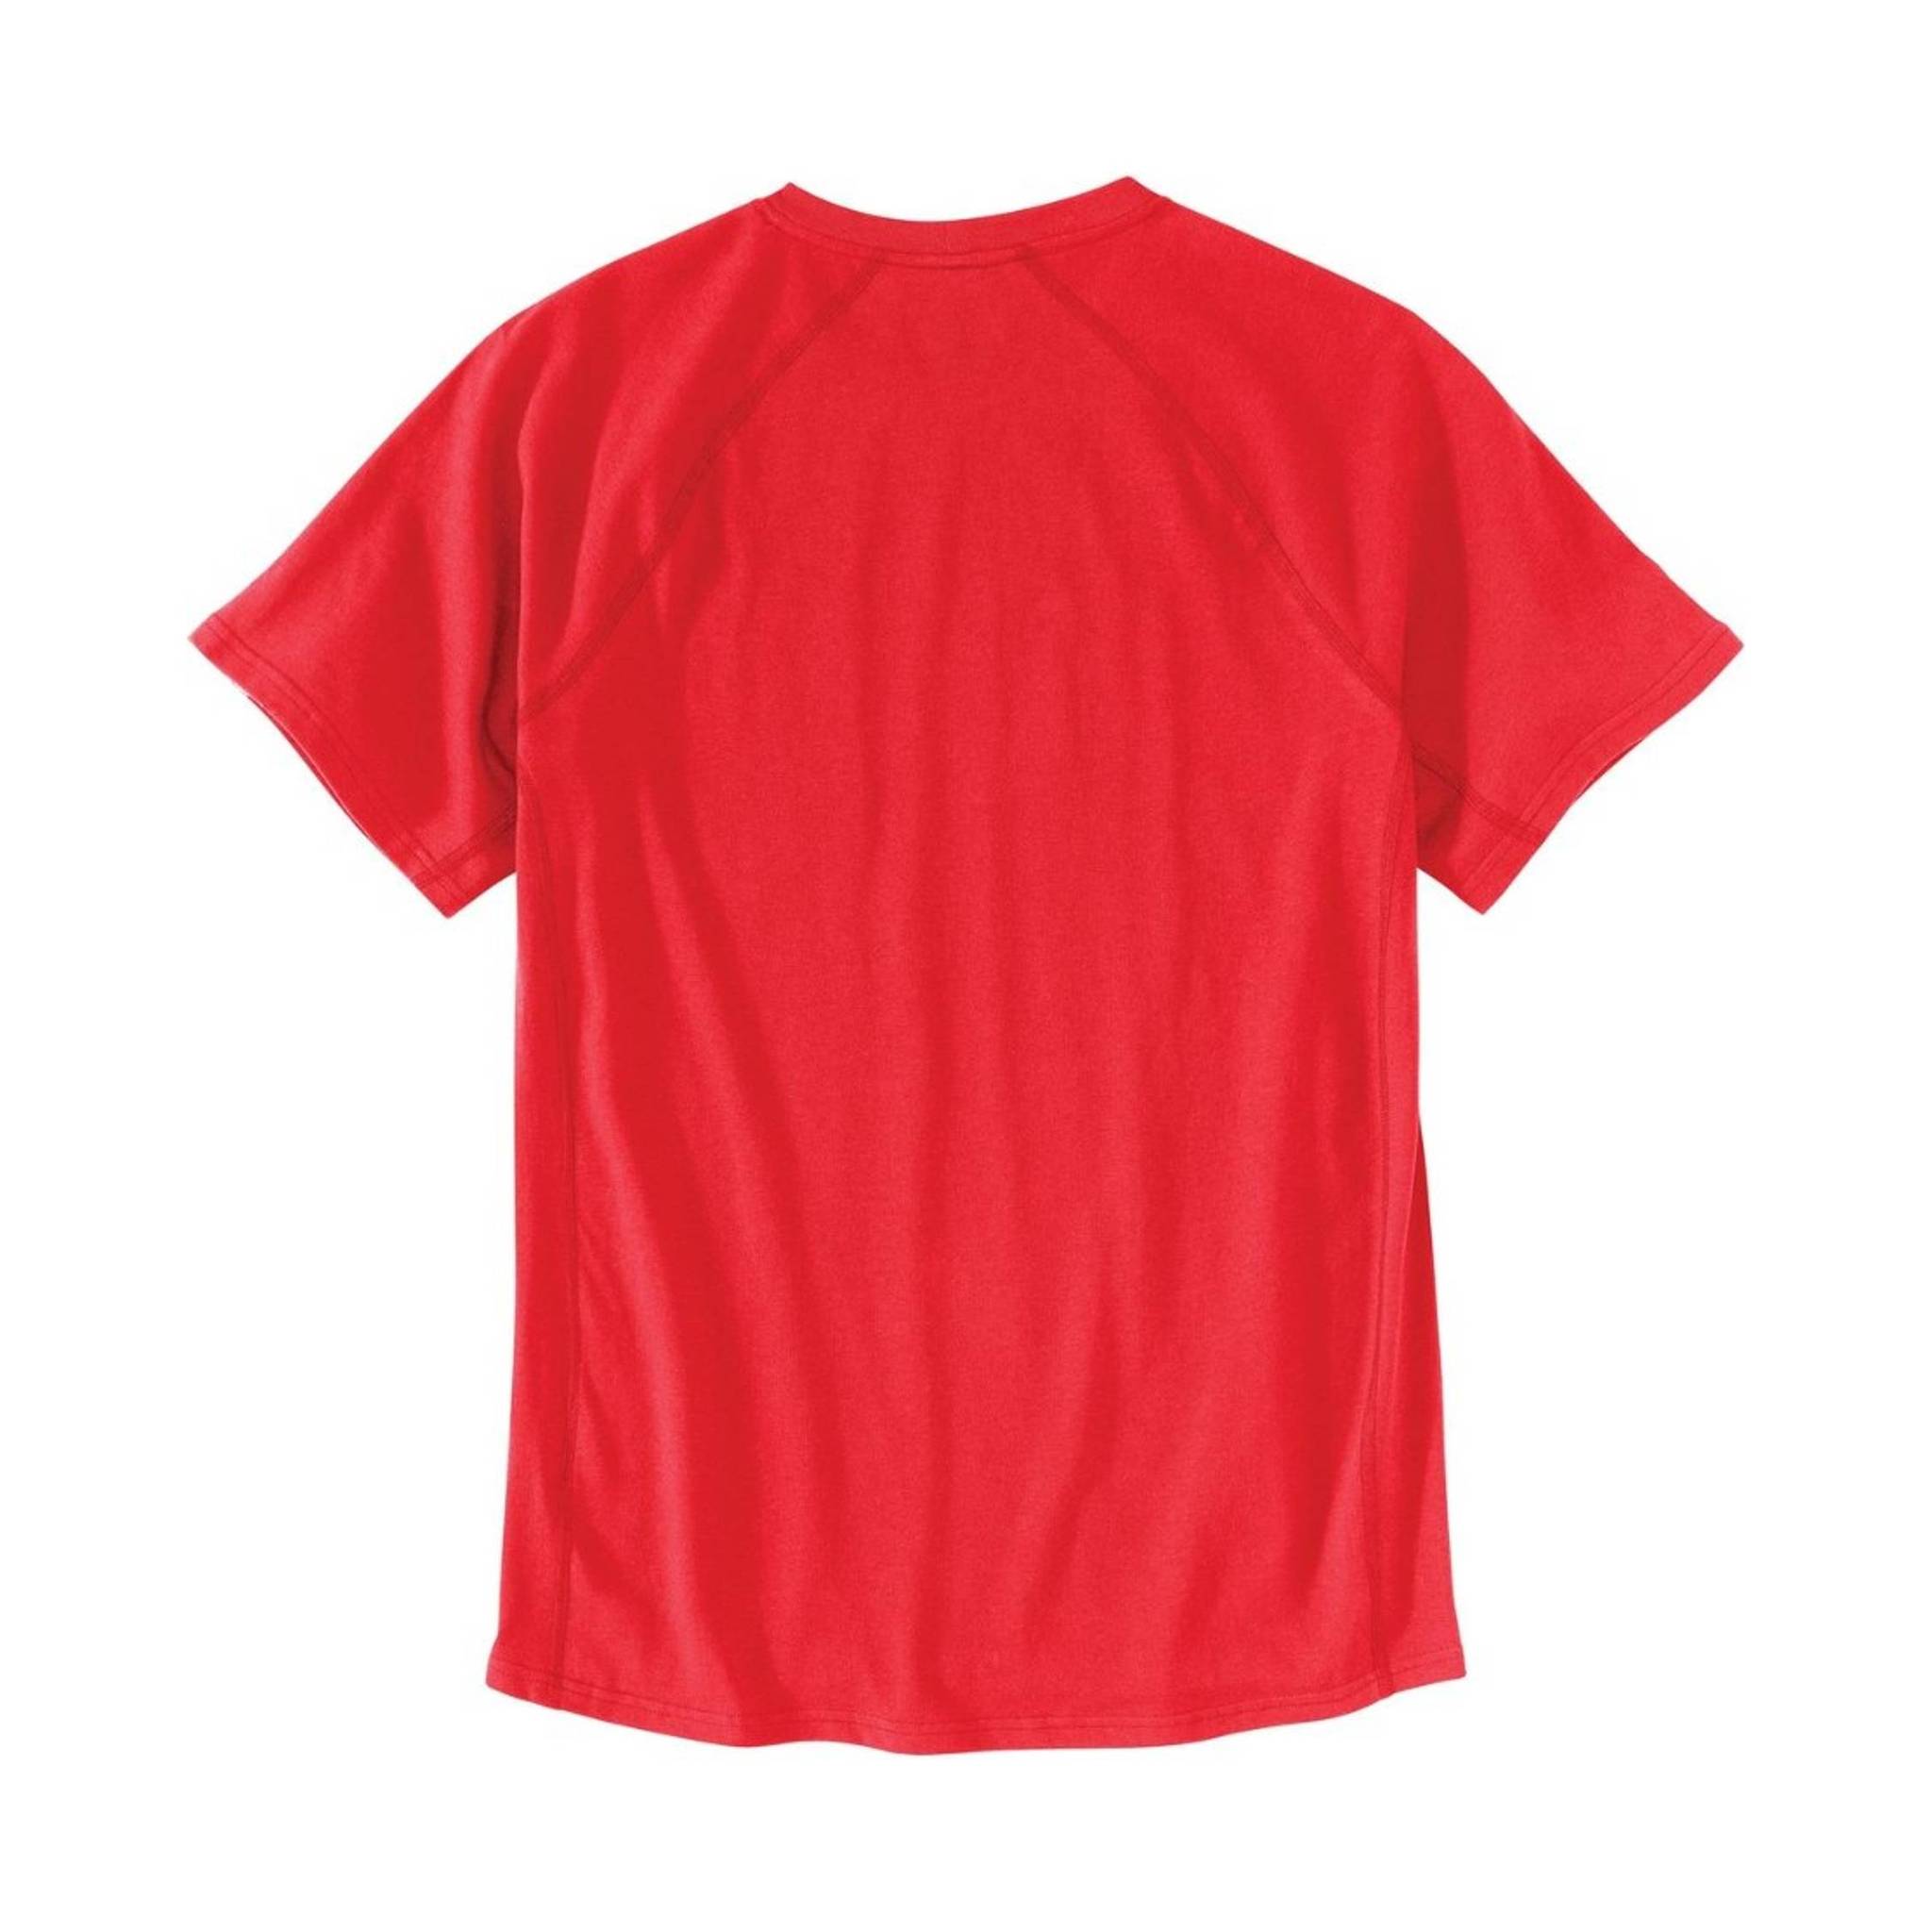 Carhartt Men's Force Relaxed Fit Short-Sleeve Pocket T-Shirt - Fire Red